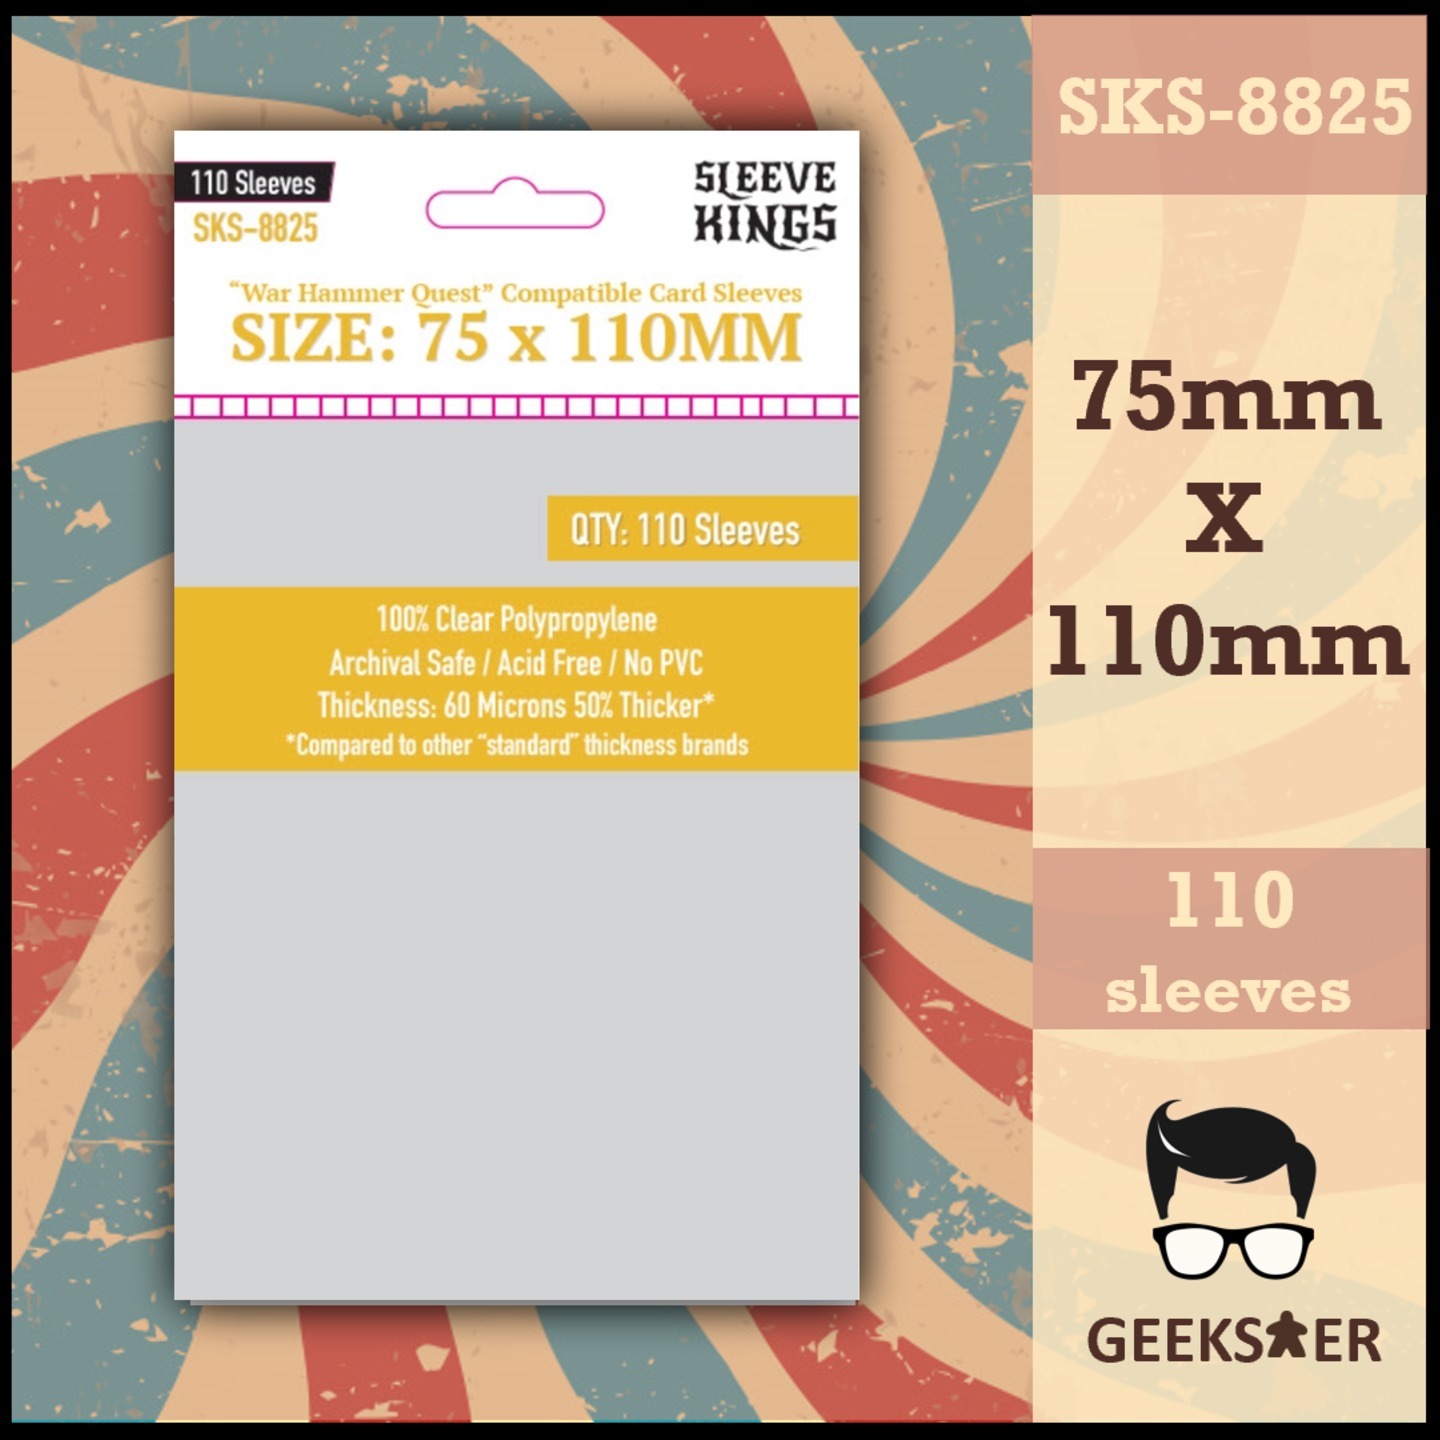 8825 Sleeve Kings War Hammer Quest Compatible 75 X 110mm